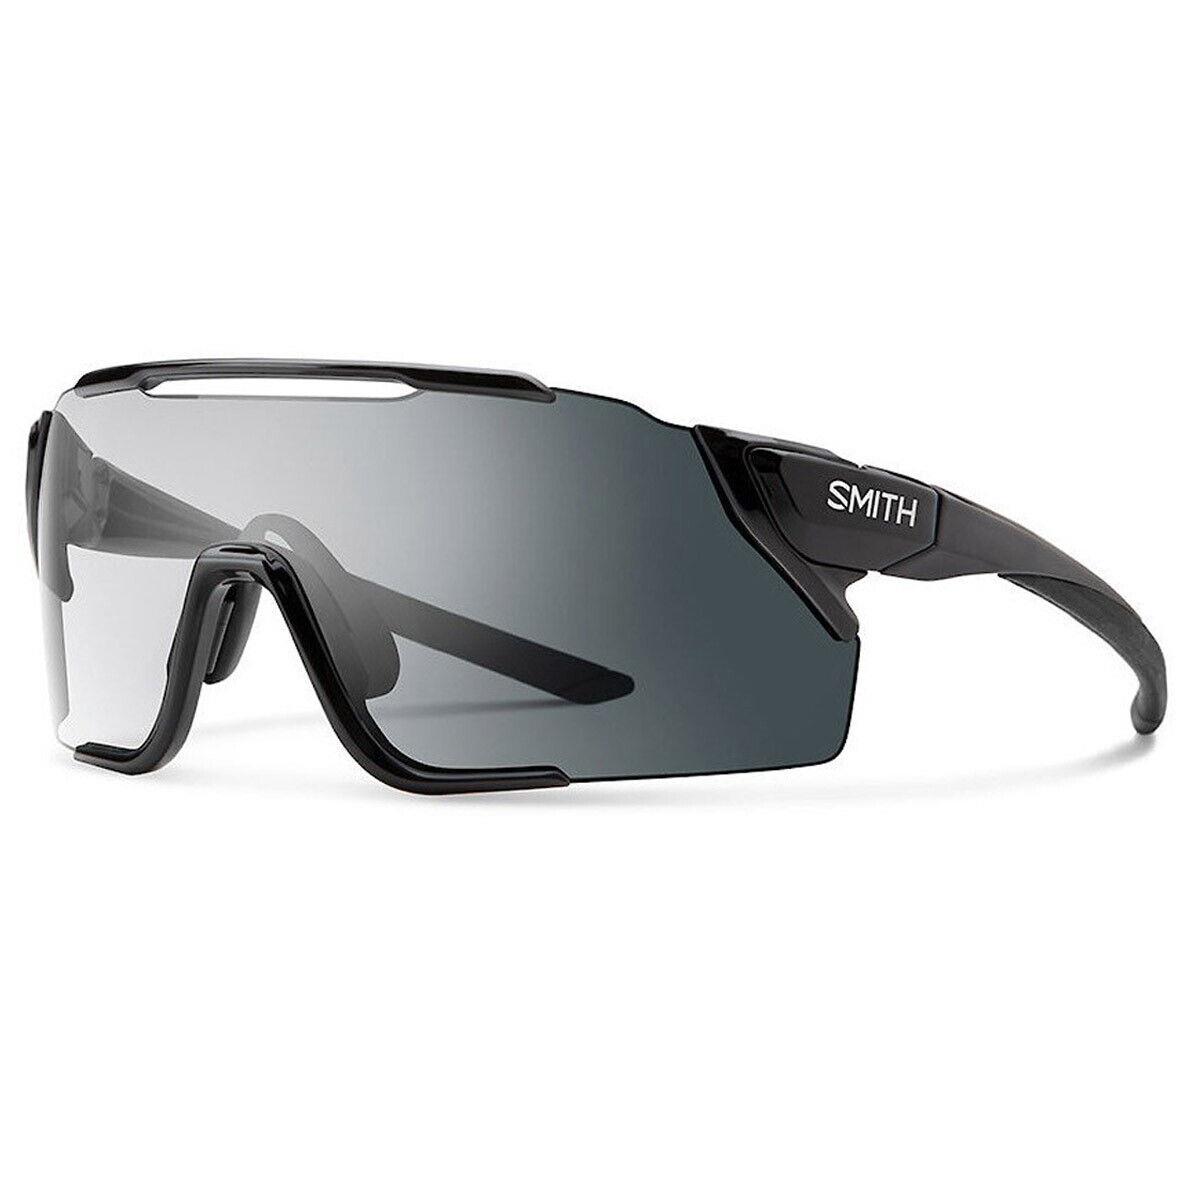 Smith Attack Mag Mtb Sunglasses Black Photochromic Clear to Gray Lens +bonus - Frame: Black, Lens: Multicolor